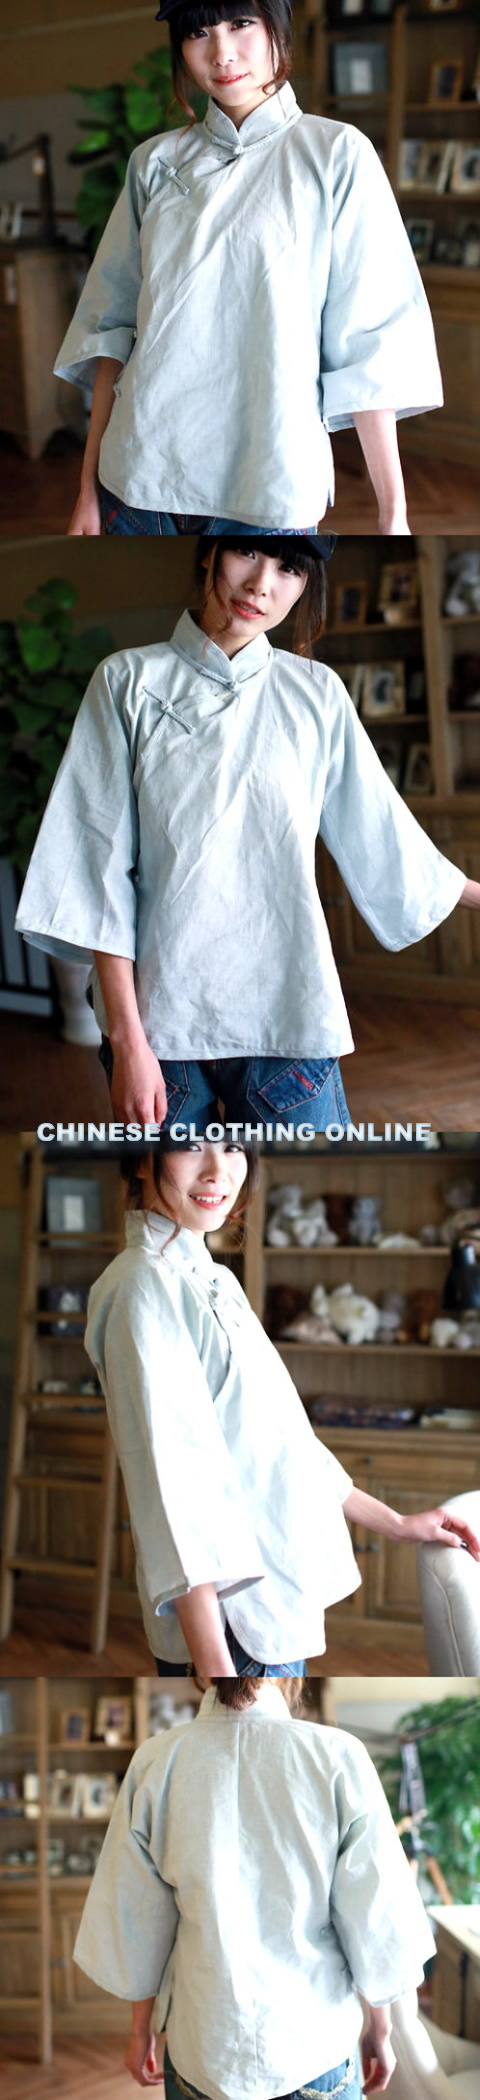 Ethnic 3/4-Sleeve Standing Collar Blouse (CM)